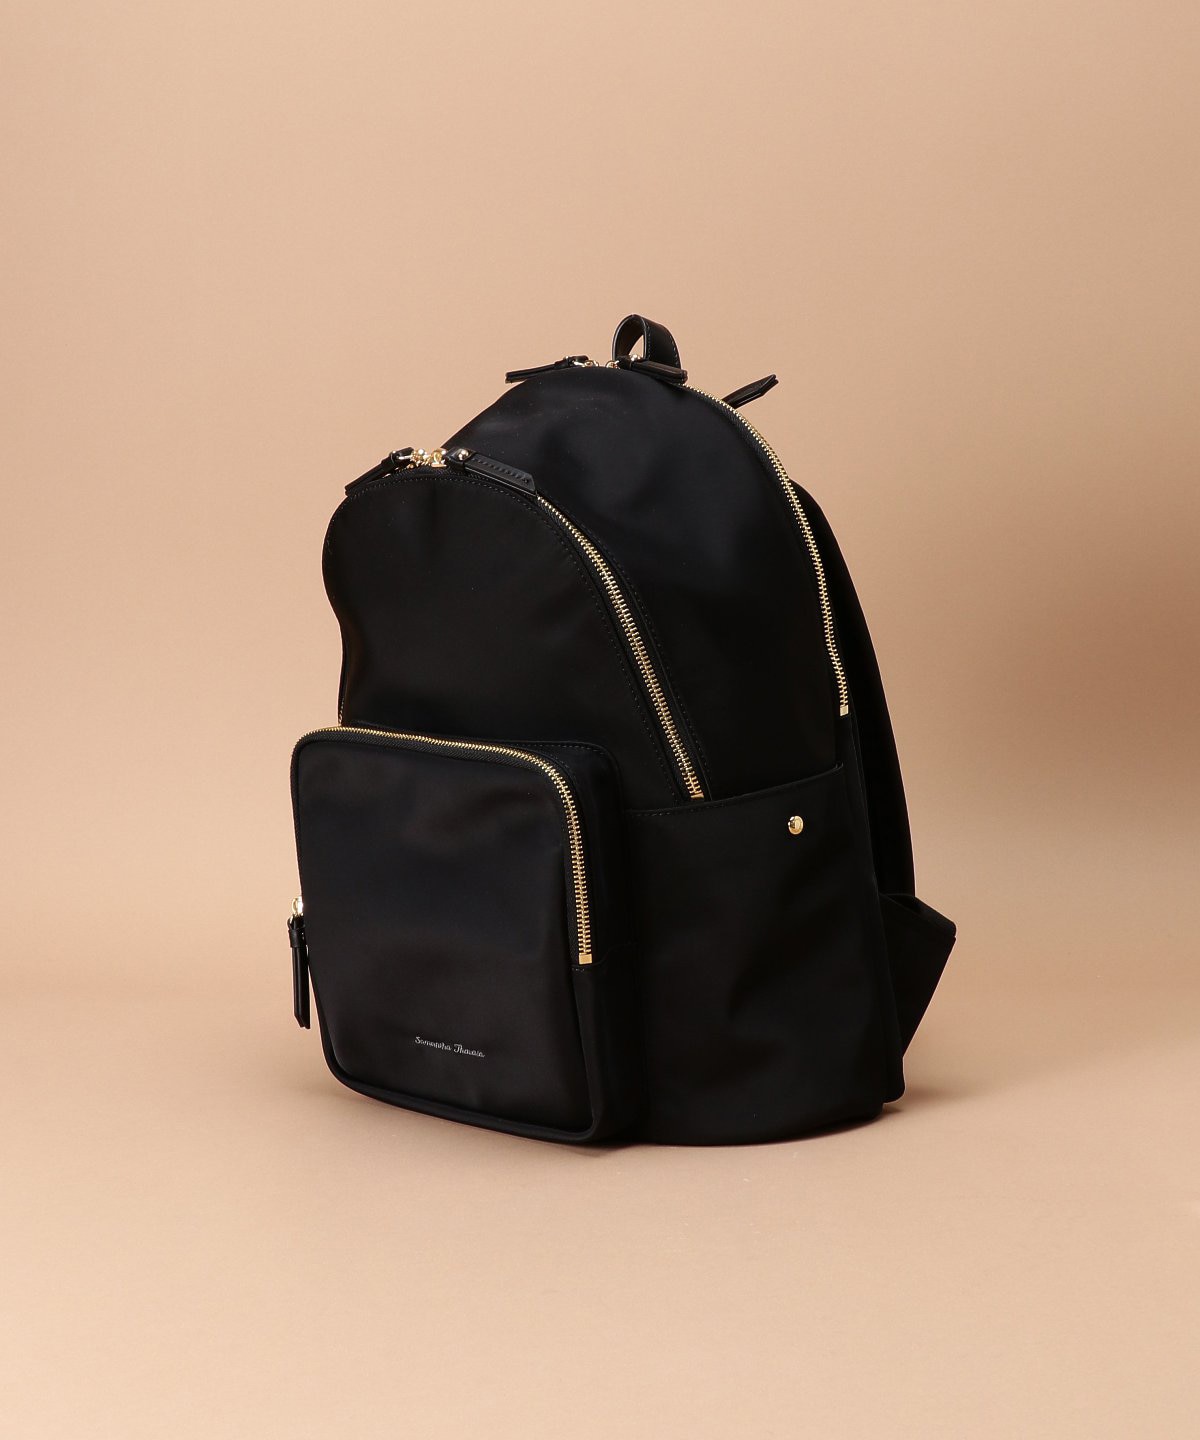 Dream bag for ナイロンリュック Ⅱ(FREE ブラック): Samantha Thavasa